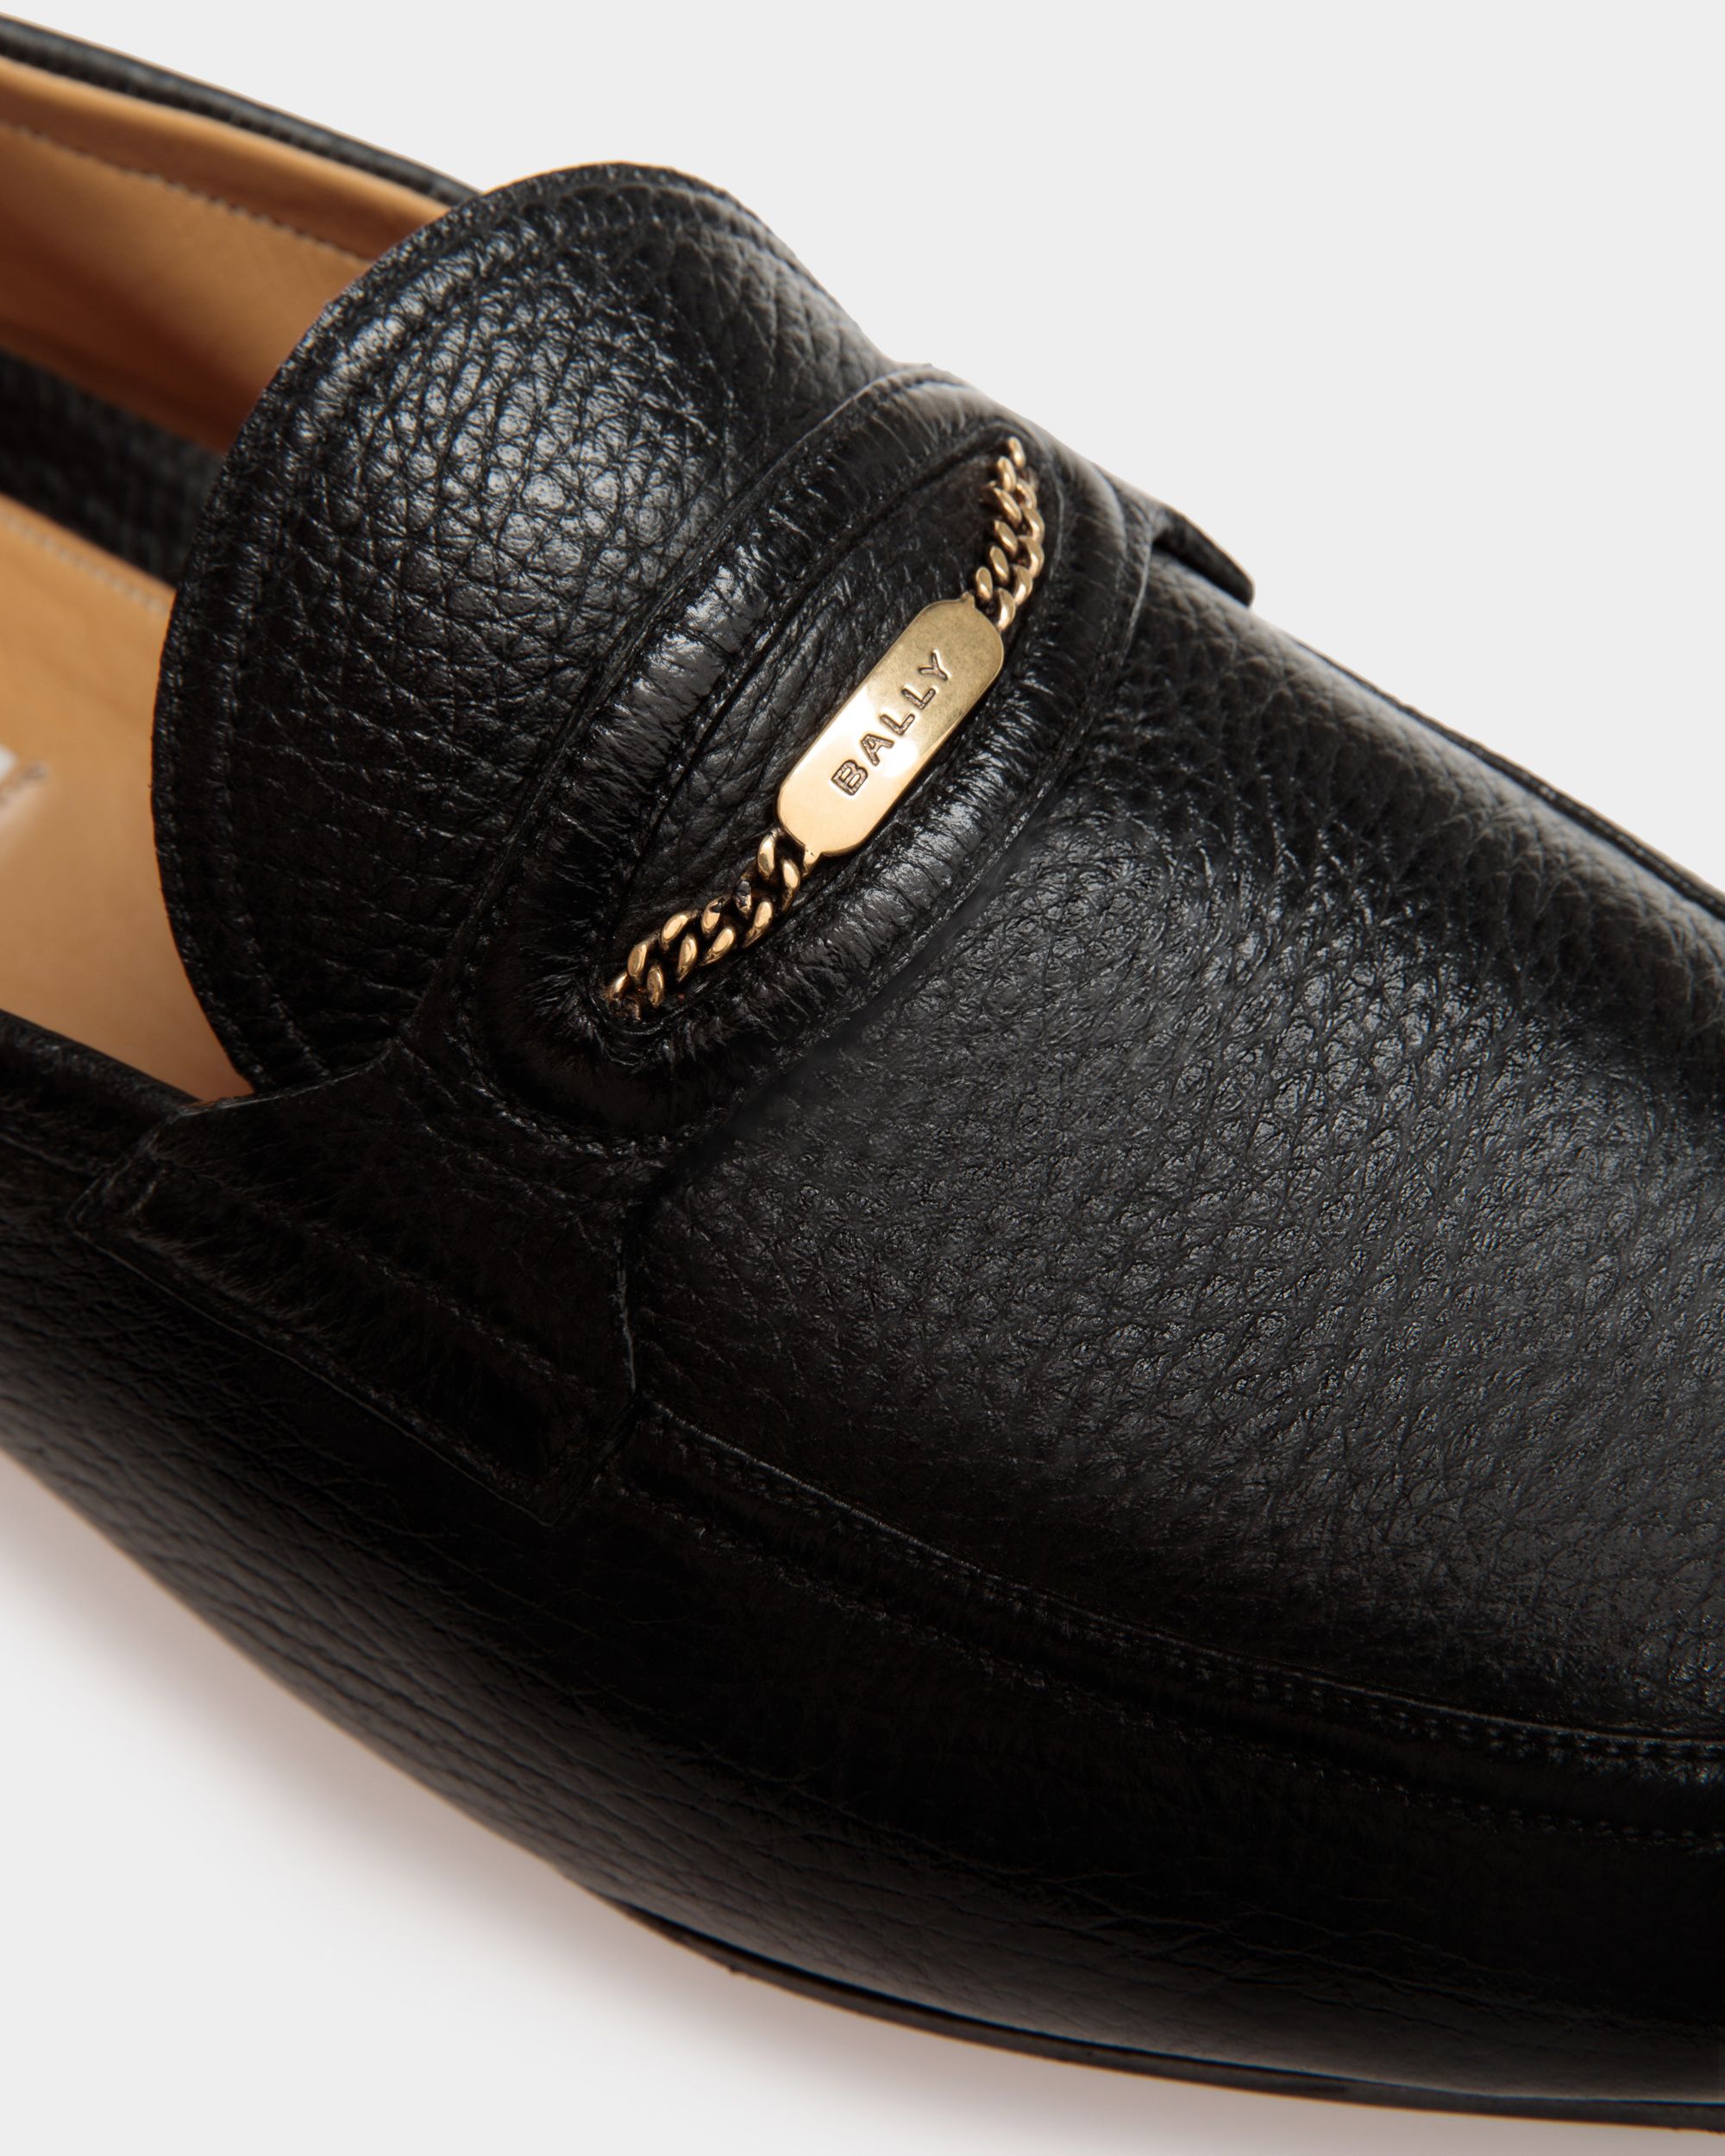 Pesek | Men's Loafers | Black Leather | Bally | Still Life Detail